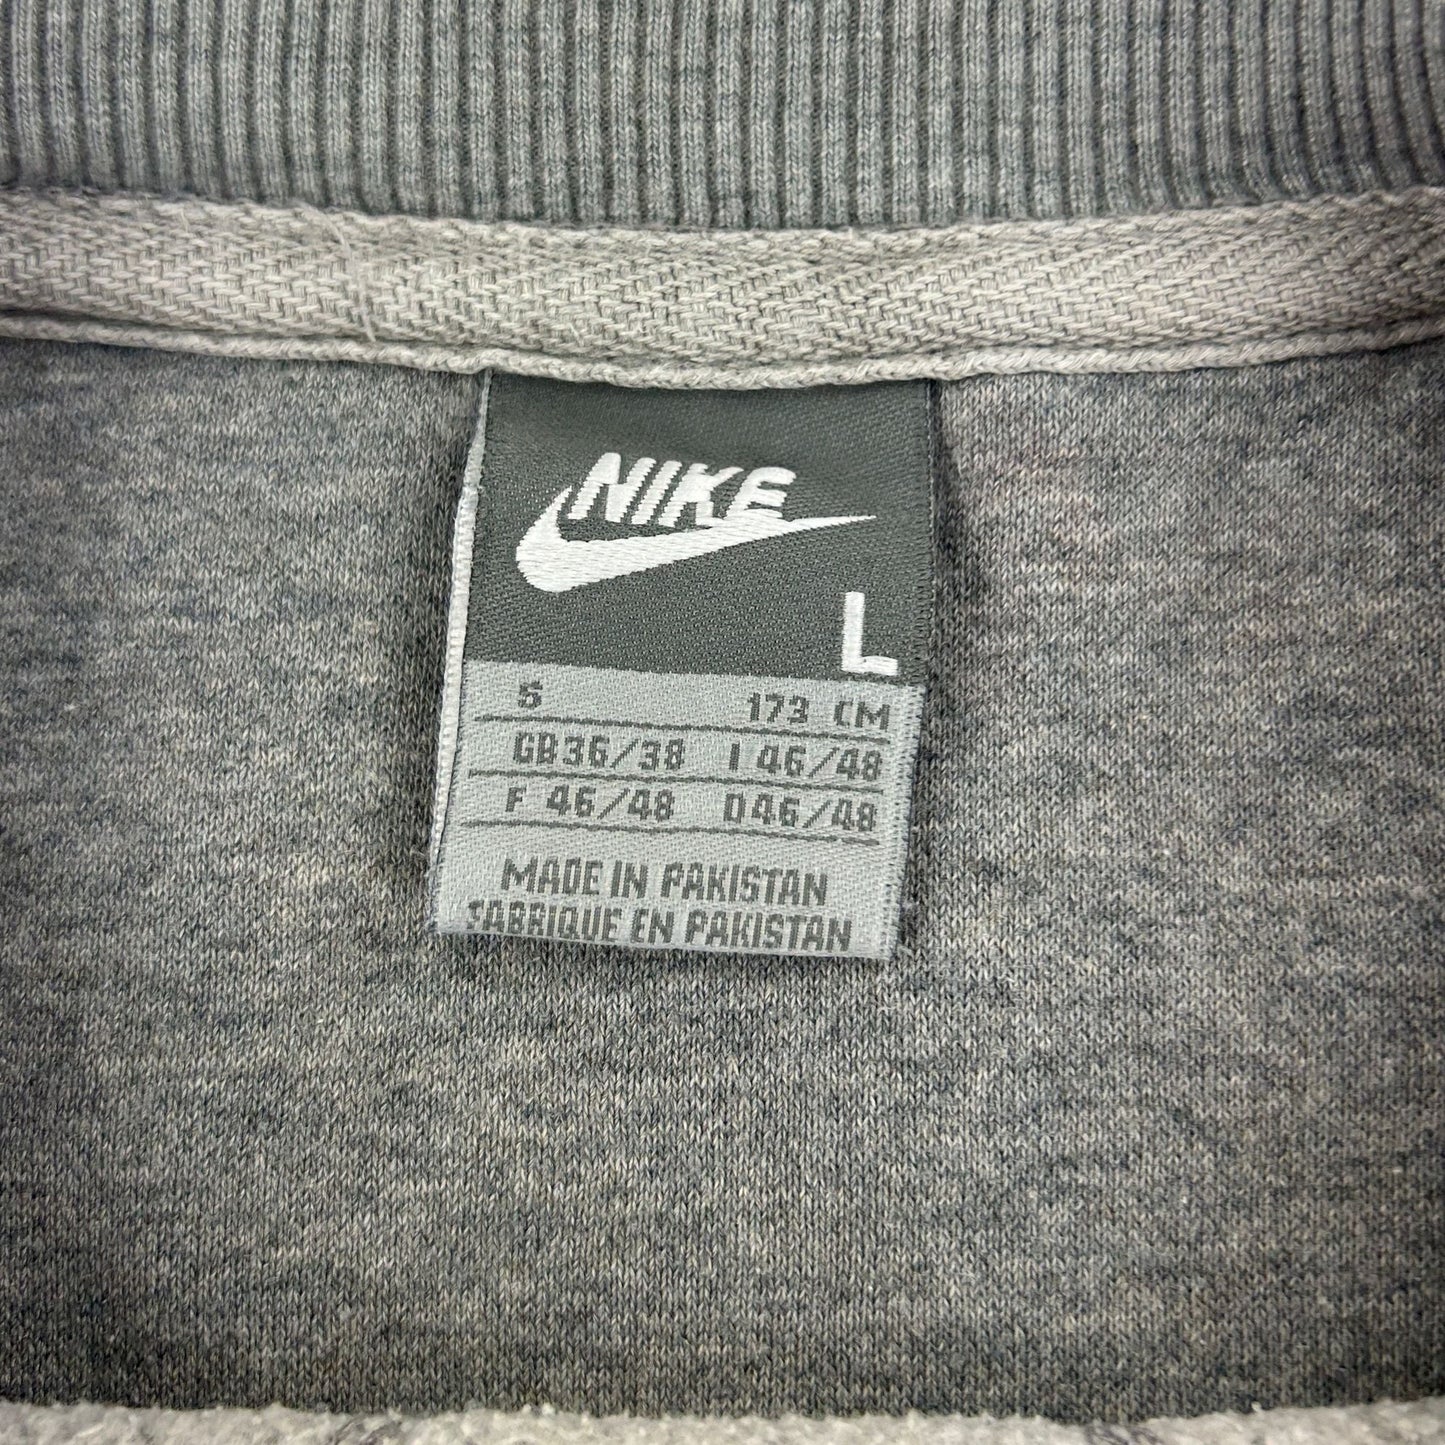 Vintage Nike Sweatshirt Size L